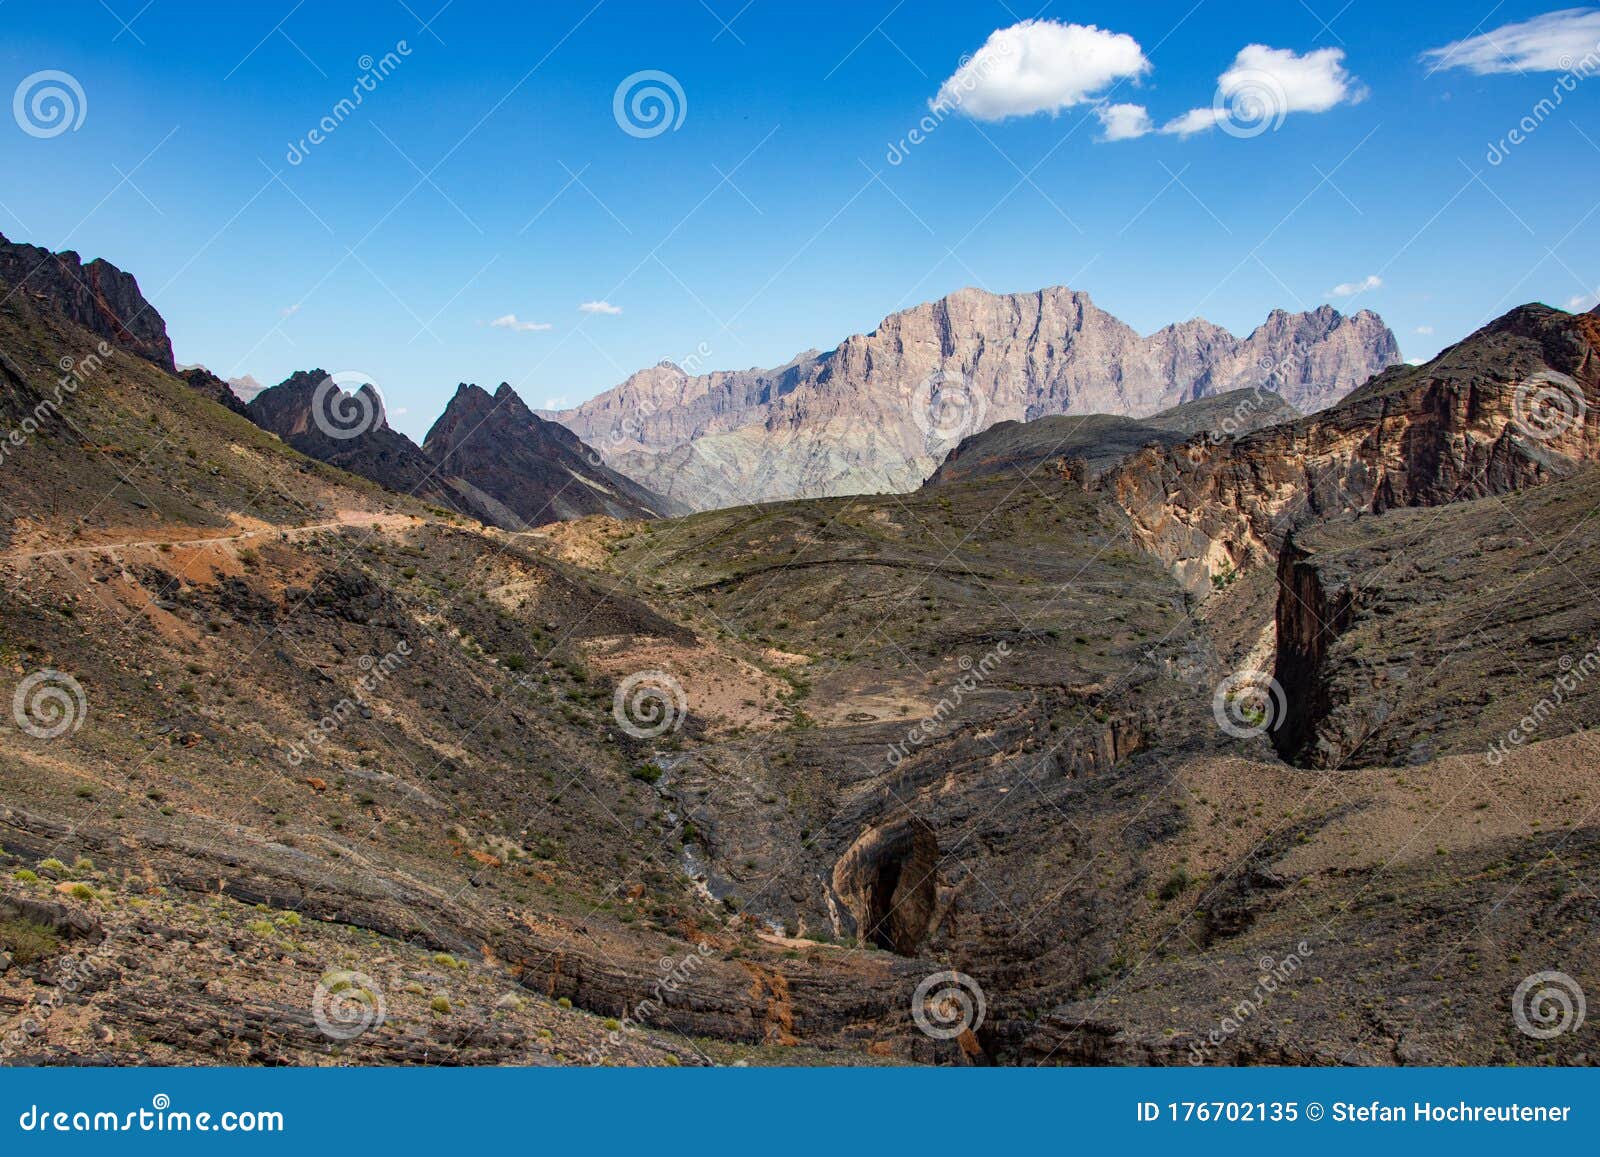 mountain and valley view along wadi sahtan road and snake canyon in al hajir mountains between nizwa and mascat in oman